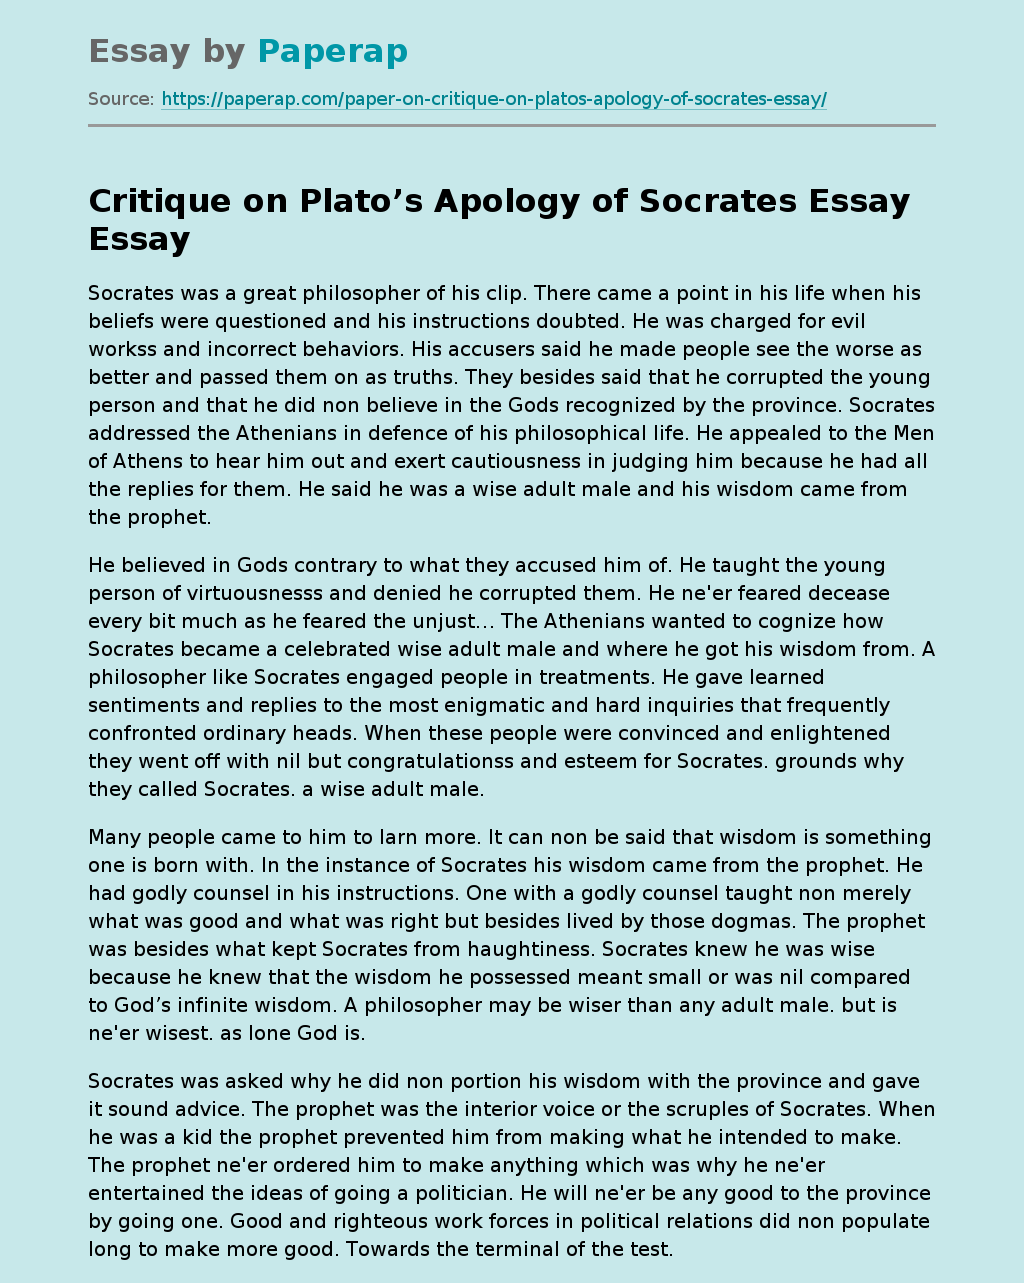 Critique on Plato’s Apology of Socrates Essay